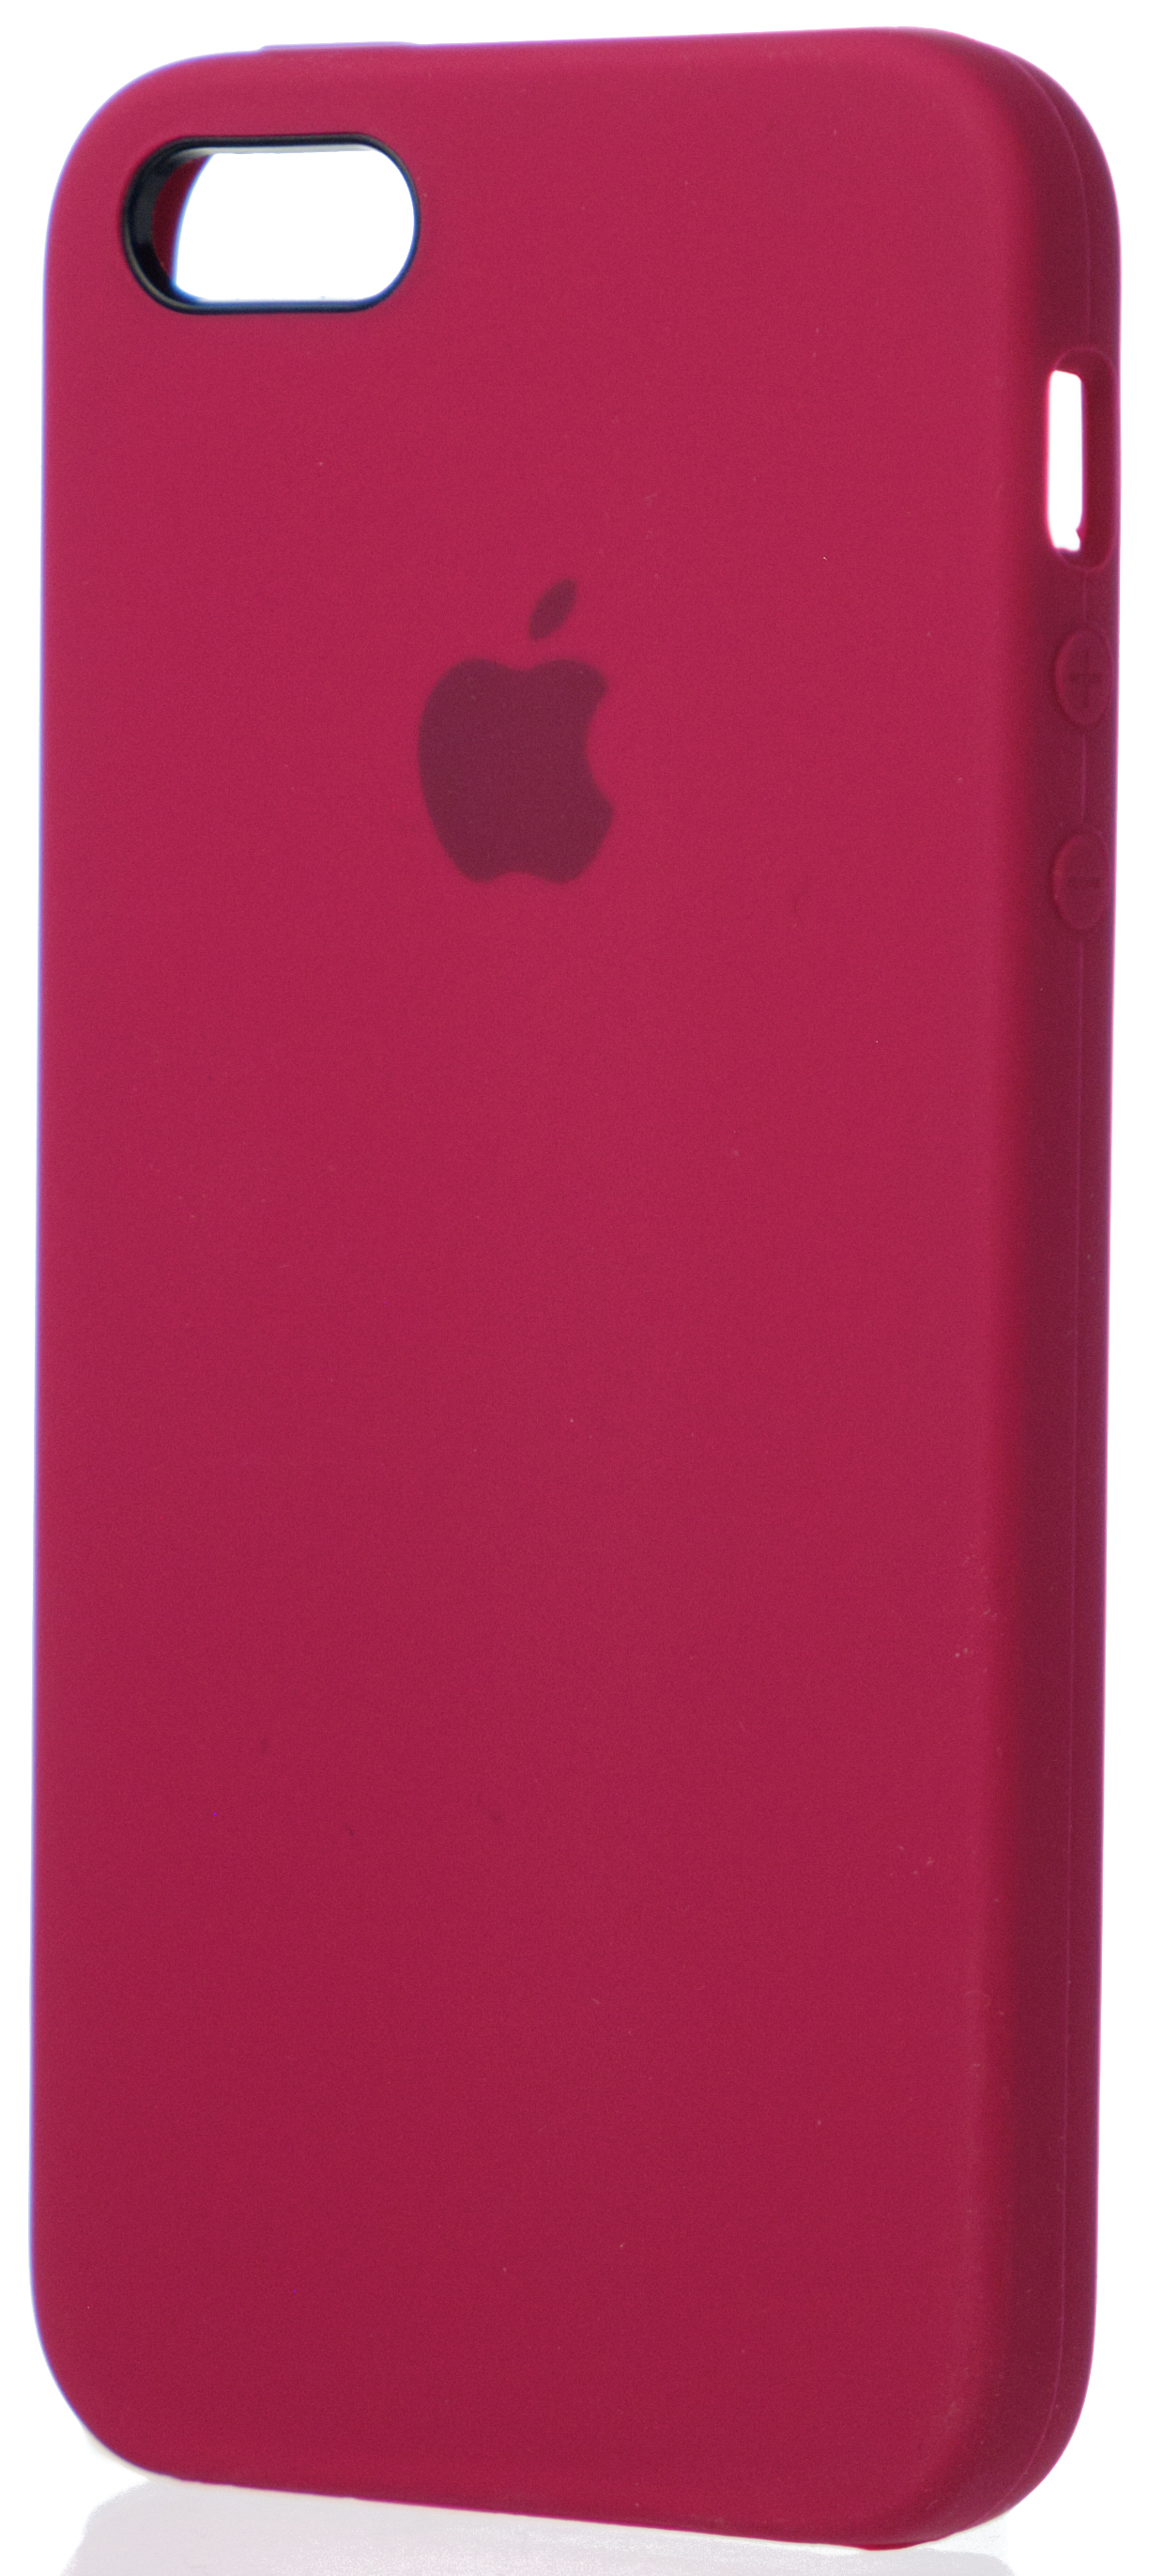 Чехол Silicone Case для iPhone 5/5s/SE бордовый